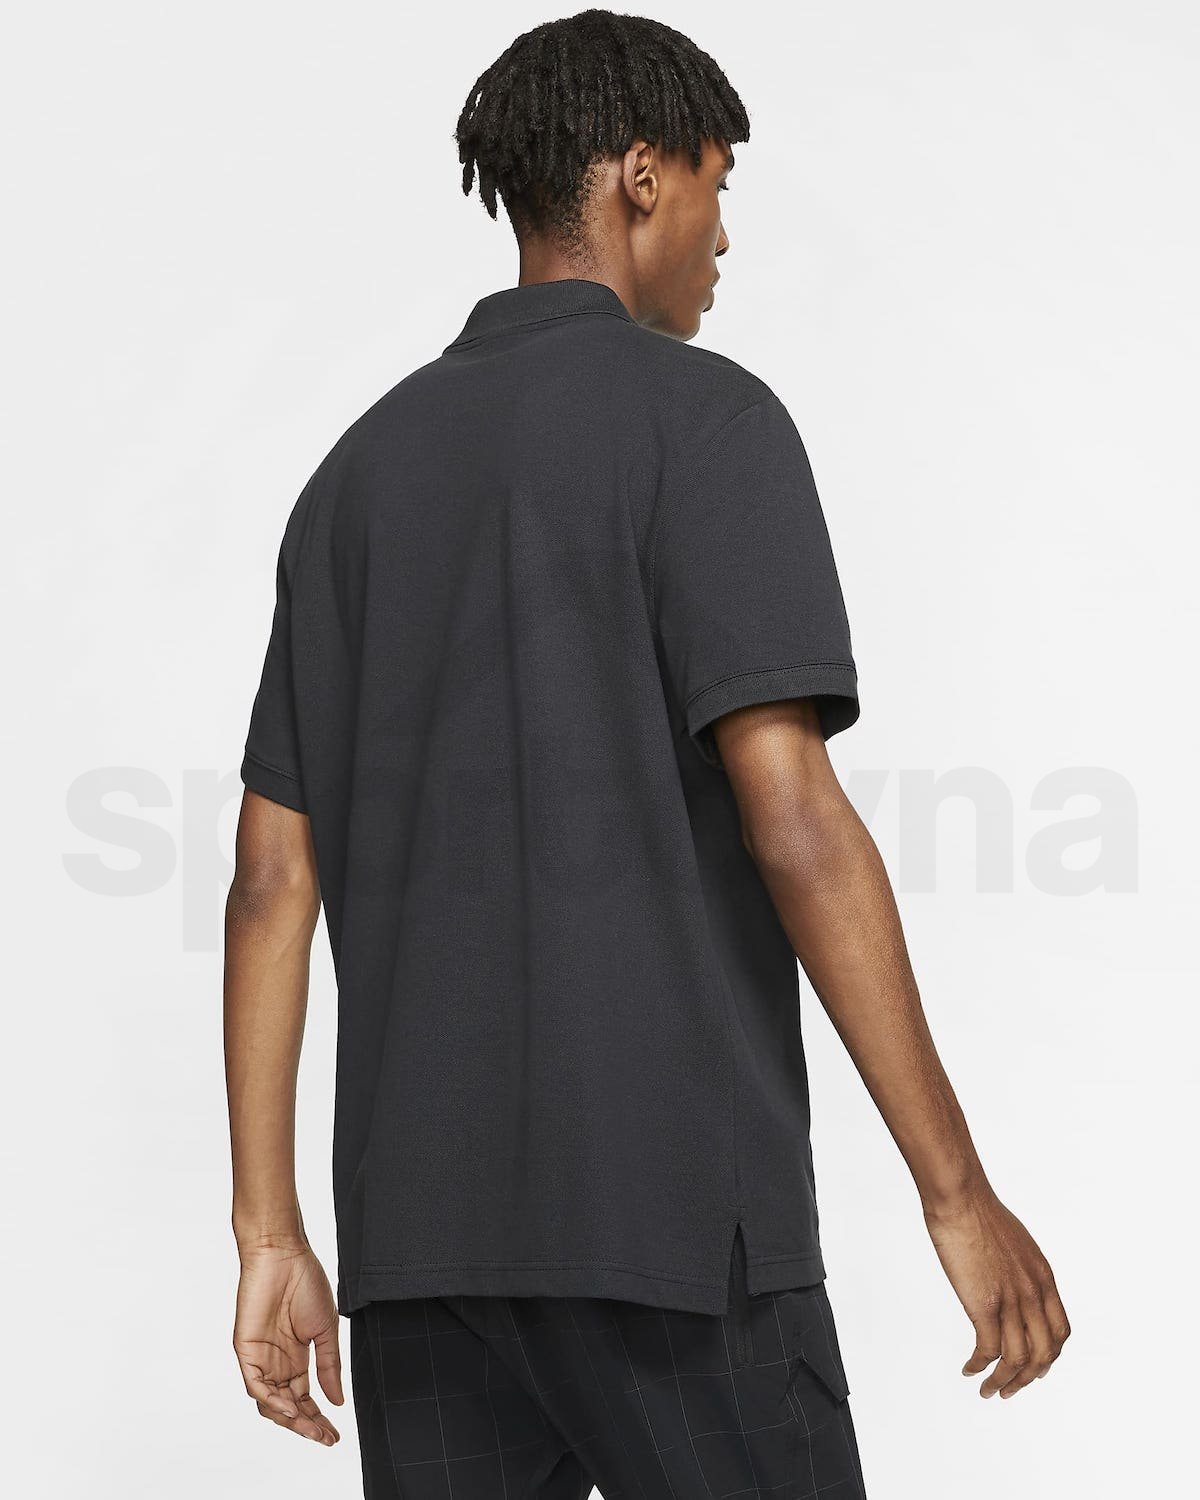 Tričko Nike Sportswear Polo M - černá